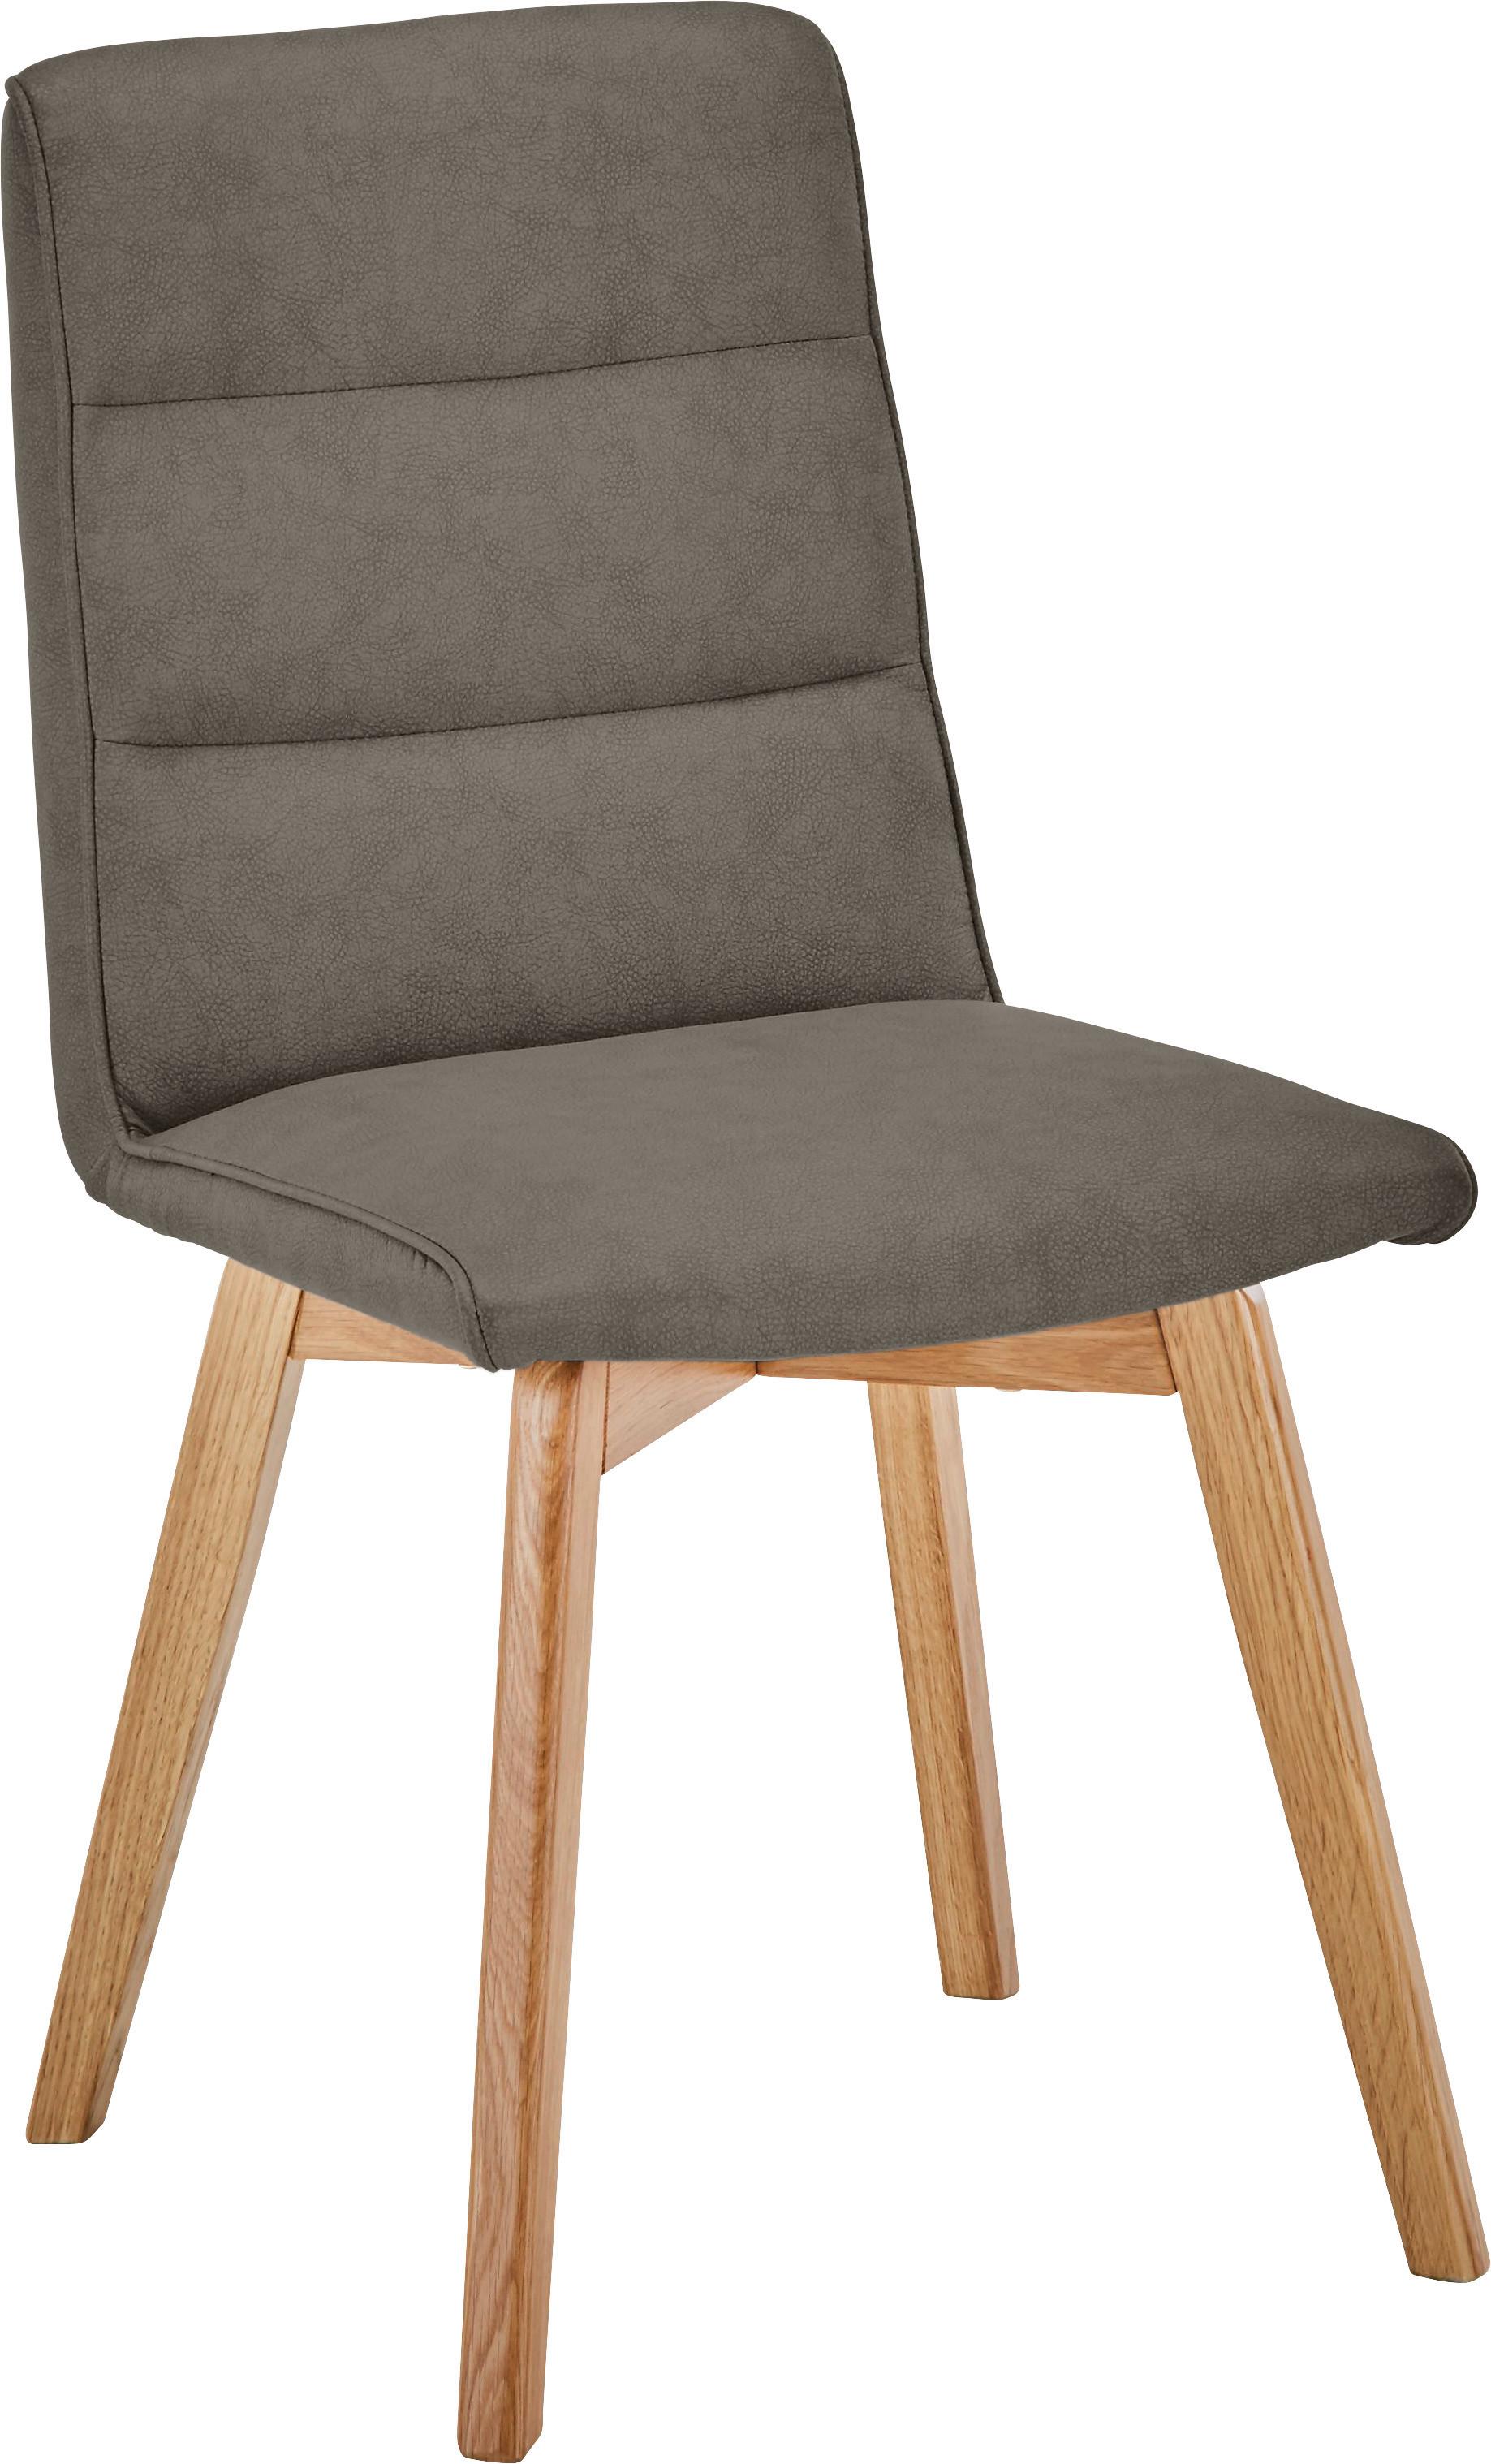 Stol Ellie - barve hrasta/rjava, Moderno, tekstil/les (44/87/55,5cm) - Zandiara